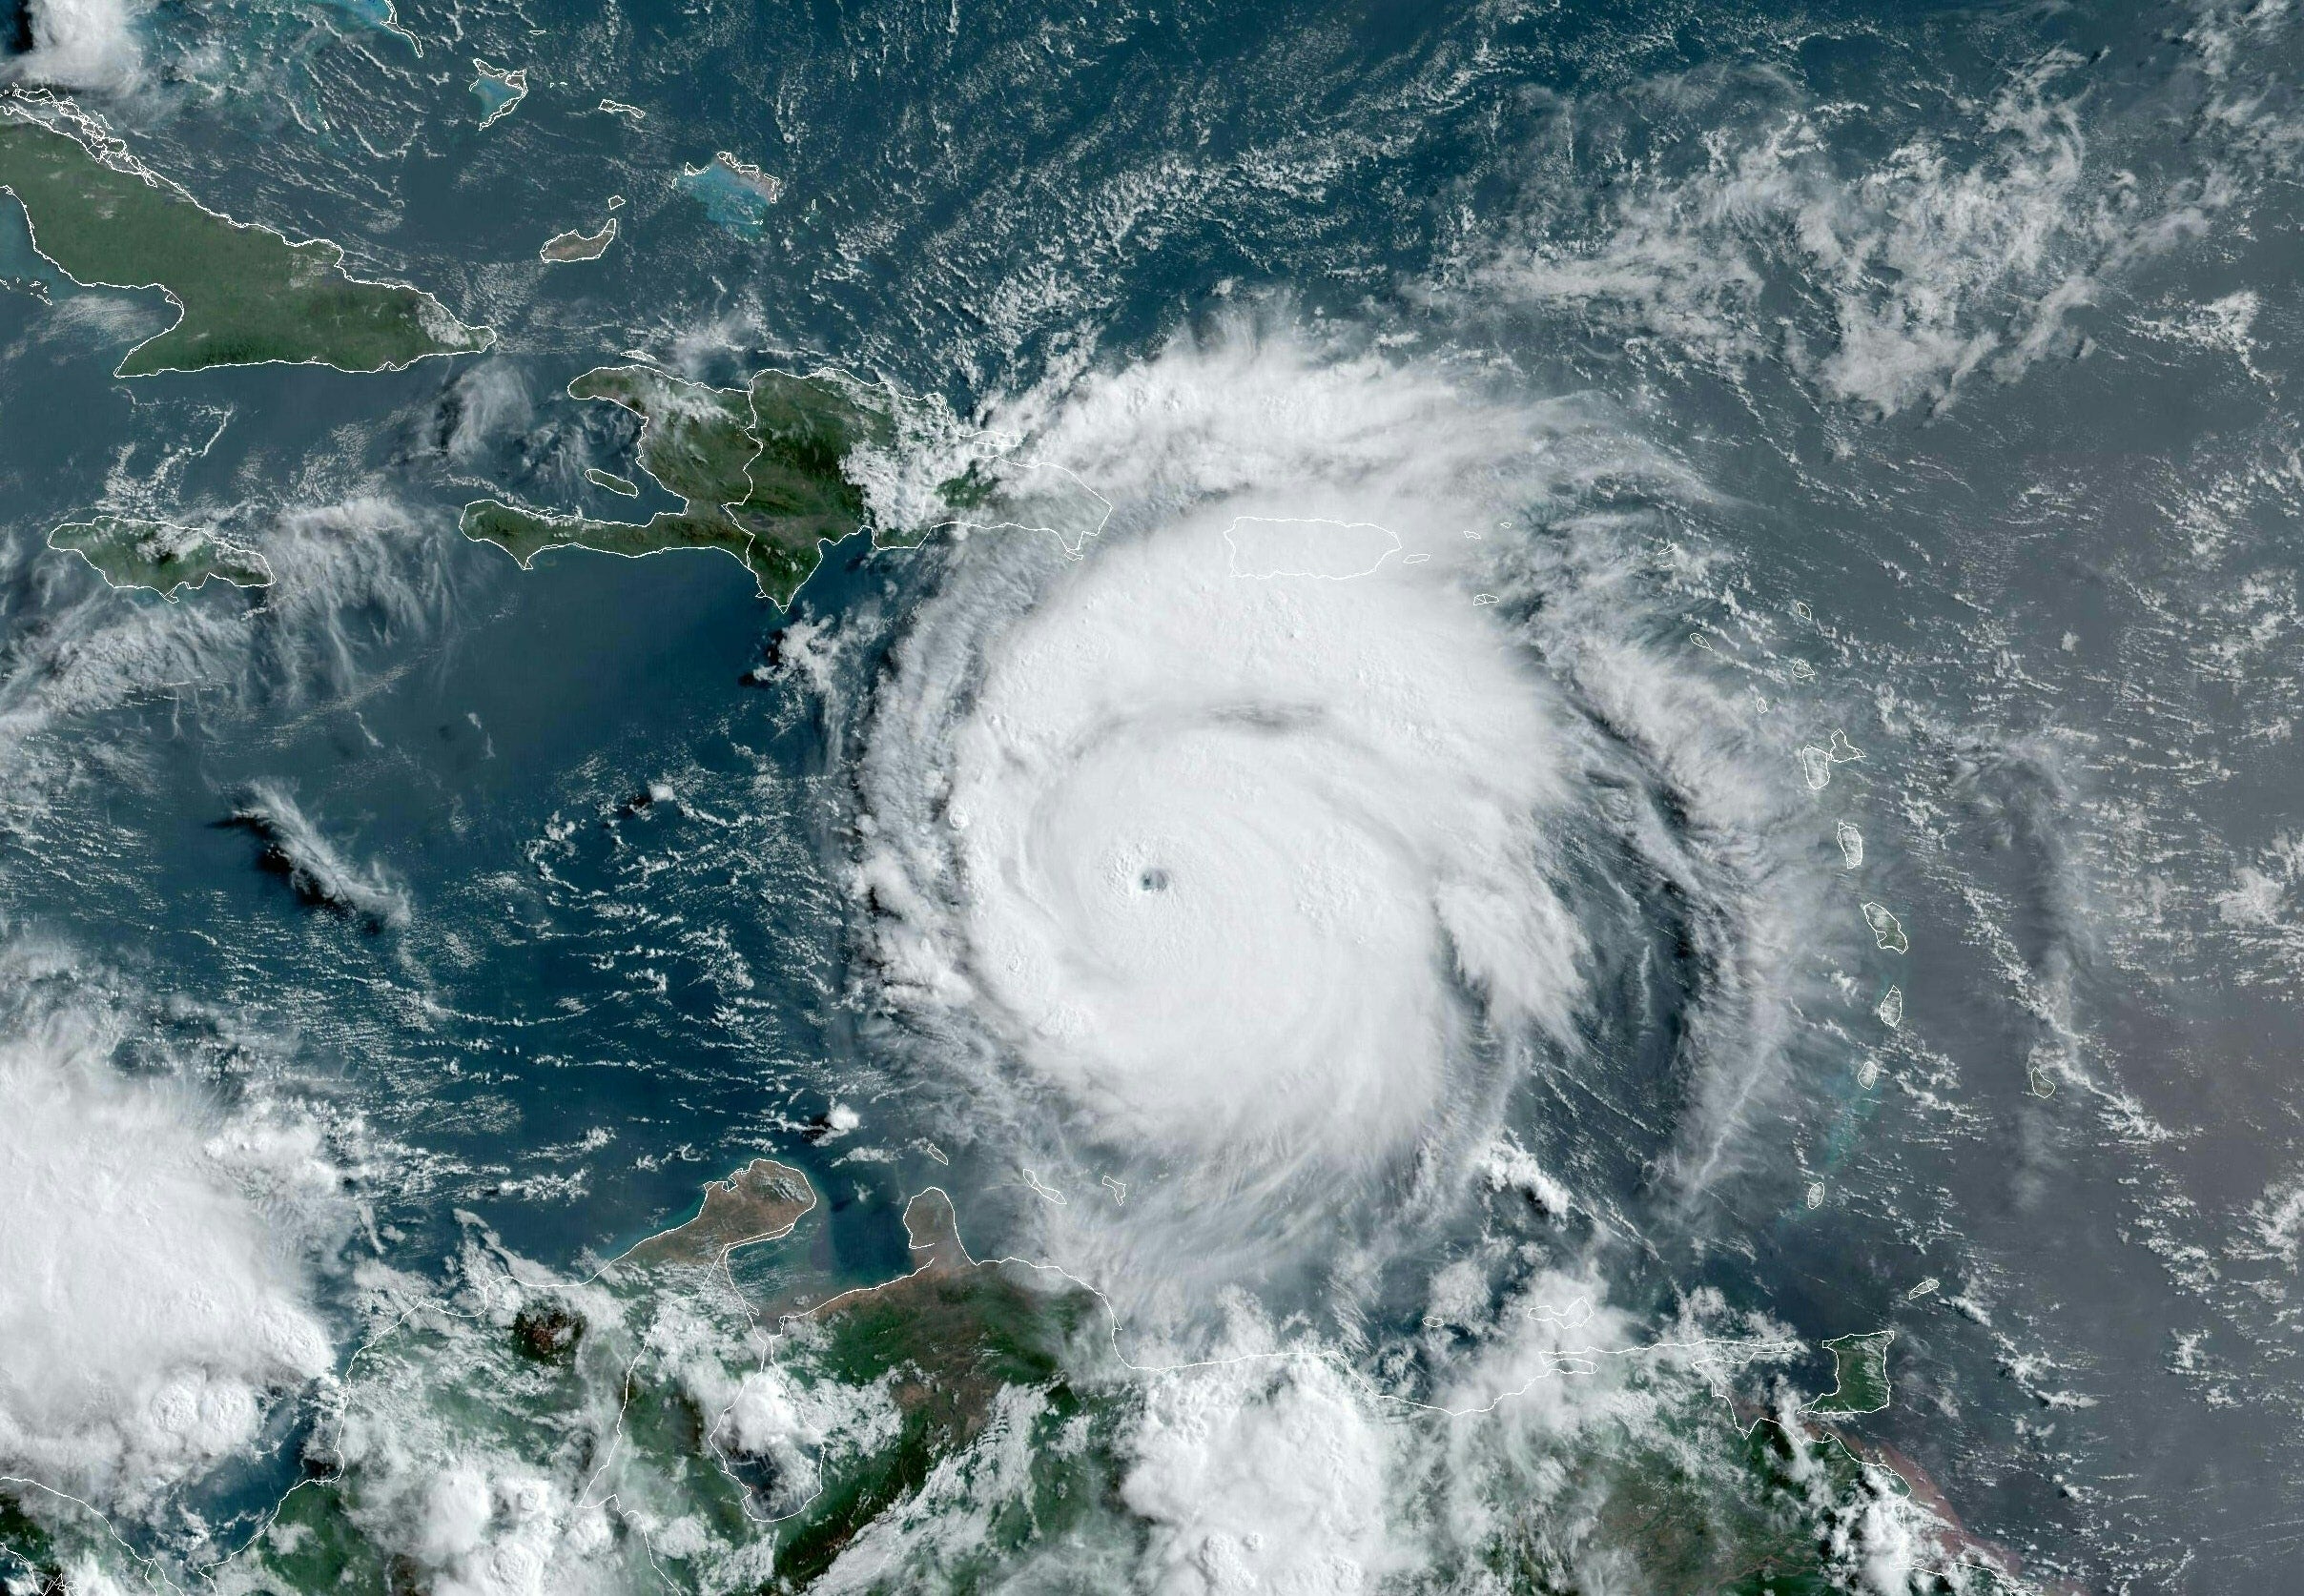 Hurricane Beryl pictured via satellite imagery moving towards Jamaica